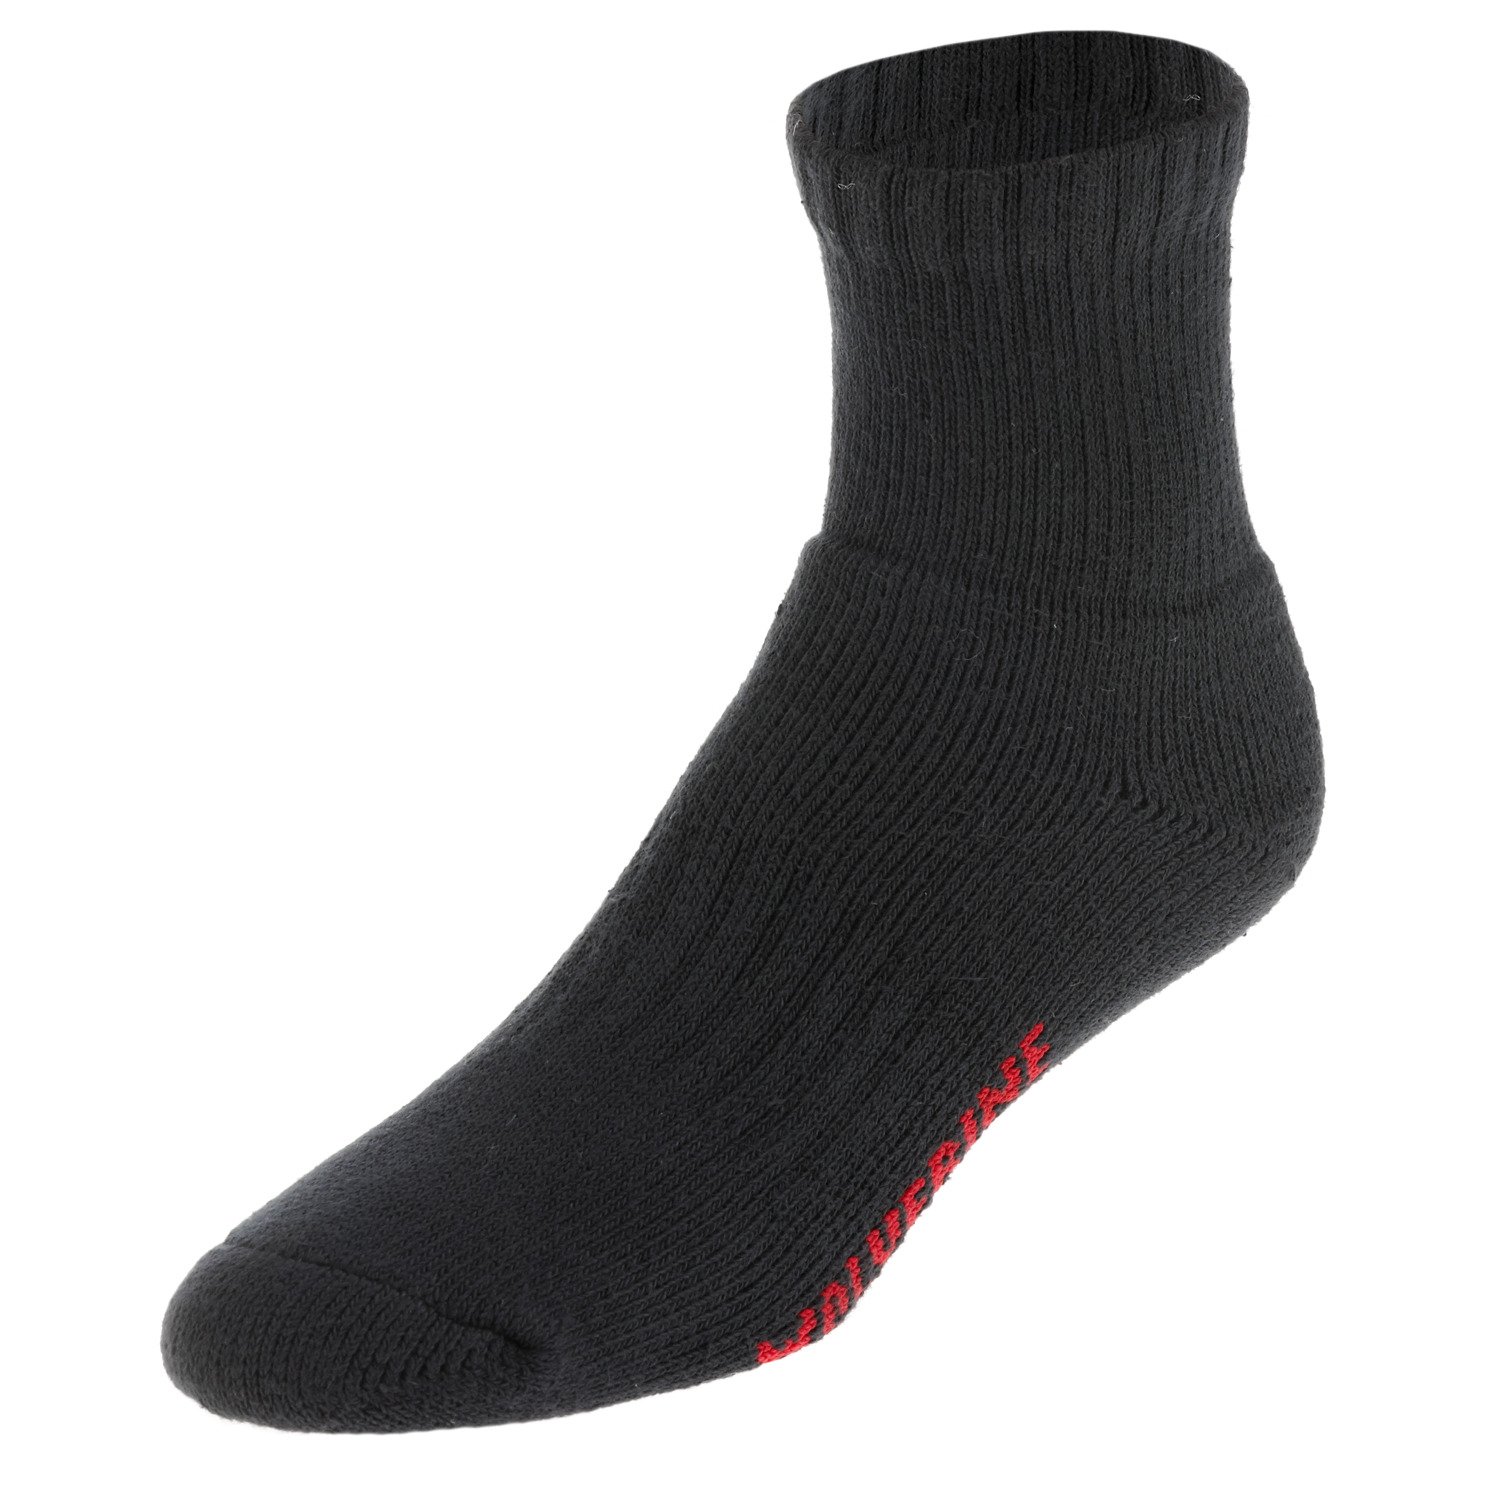 Wolverine Men's Steel-Toe Cotton Socks 2 Pack                                                                                    - view number 1 selected